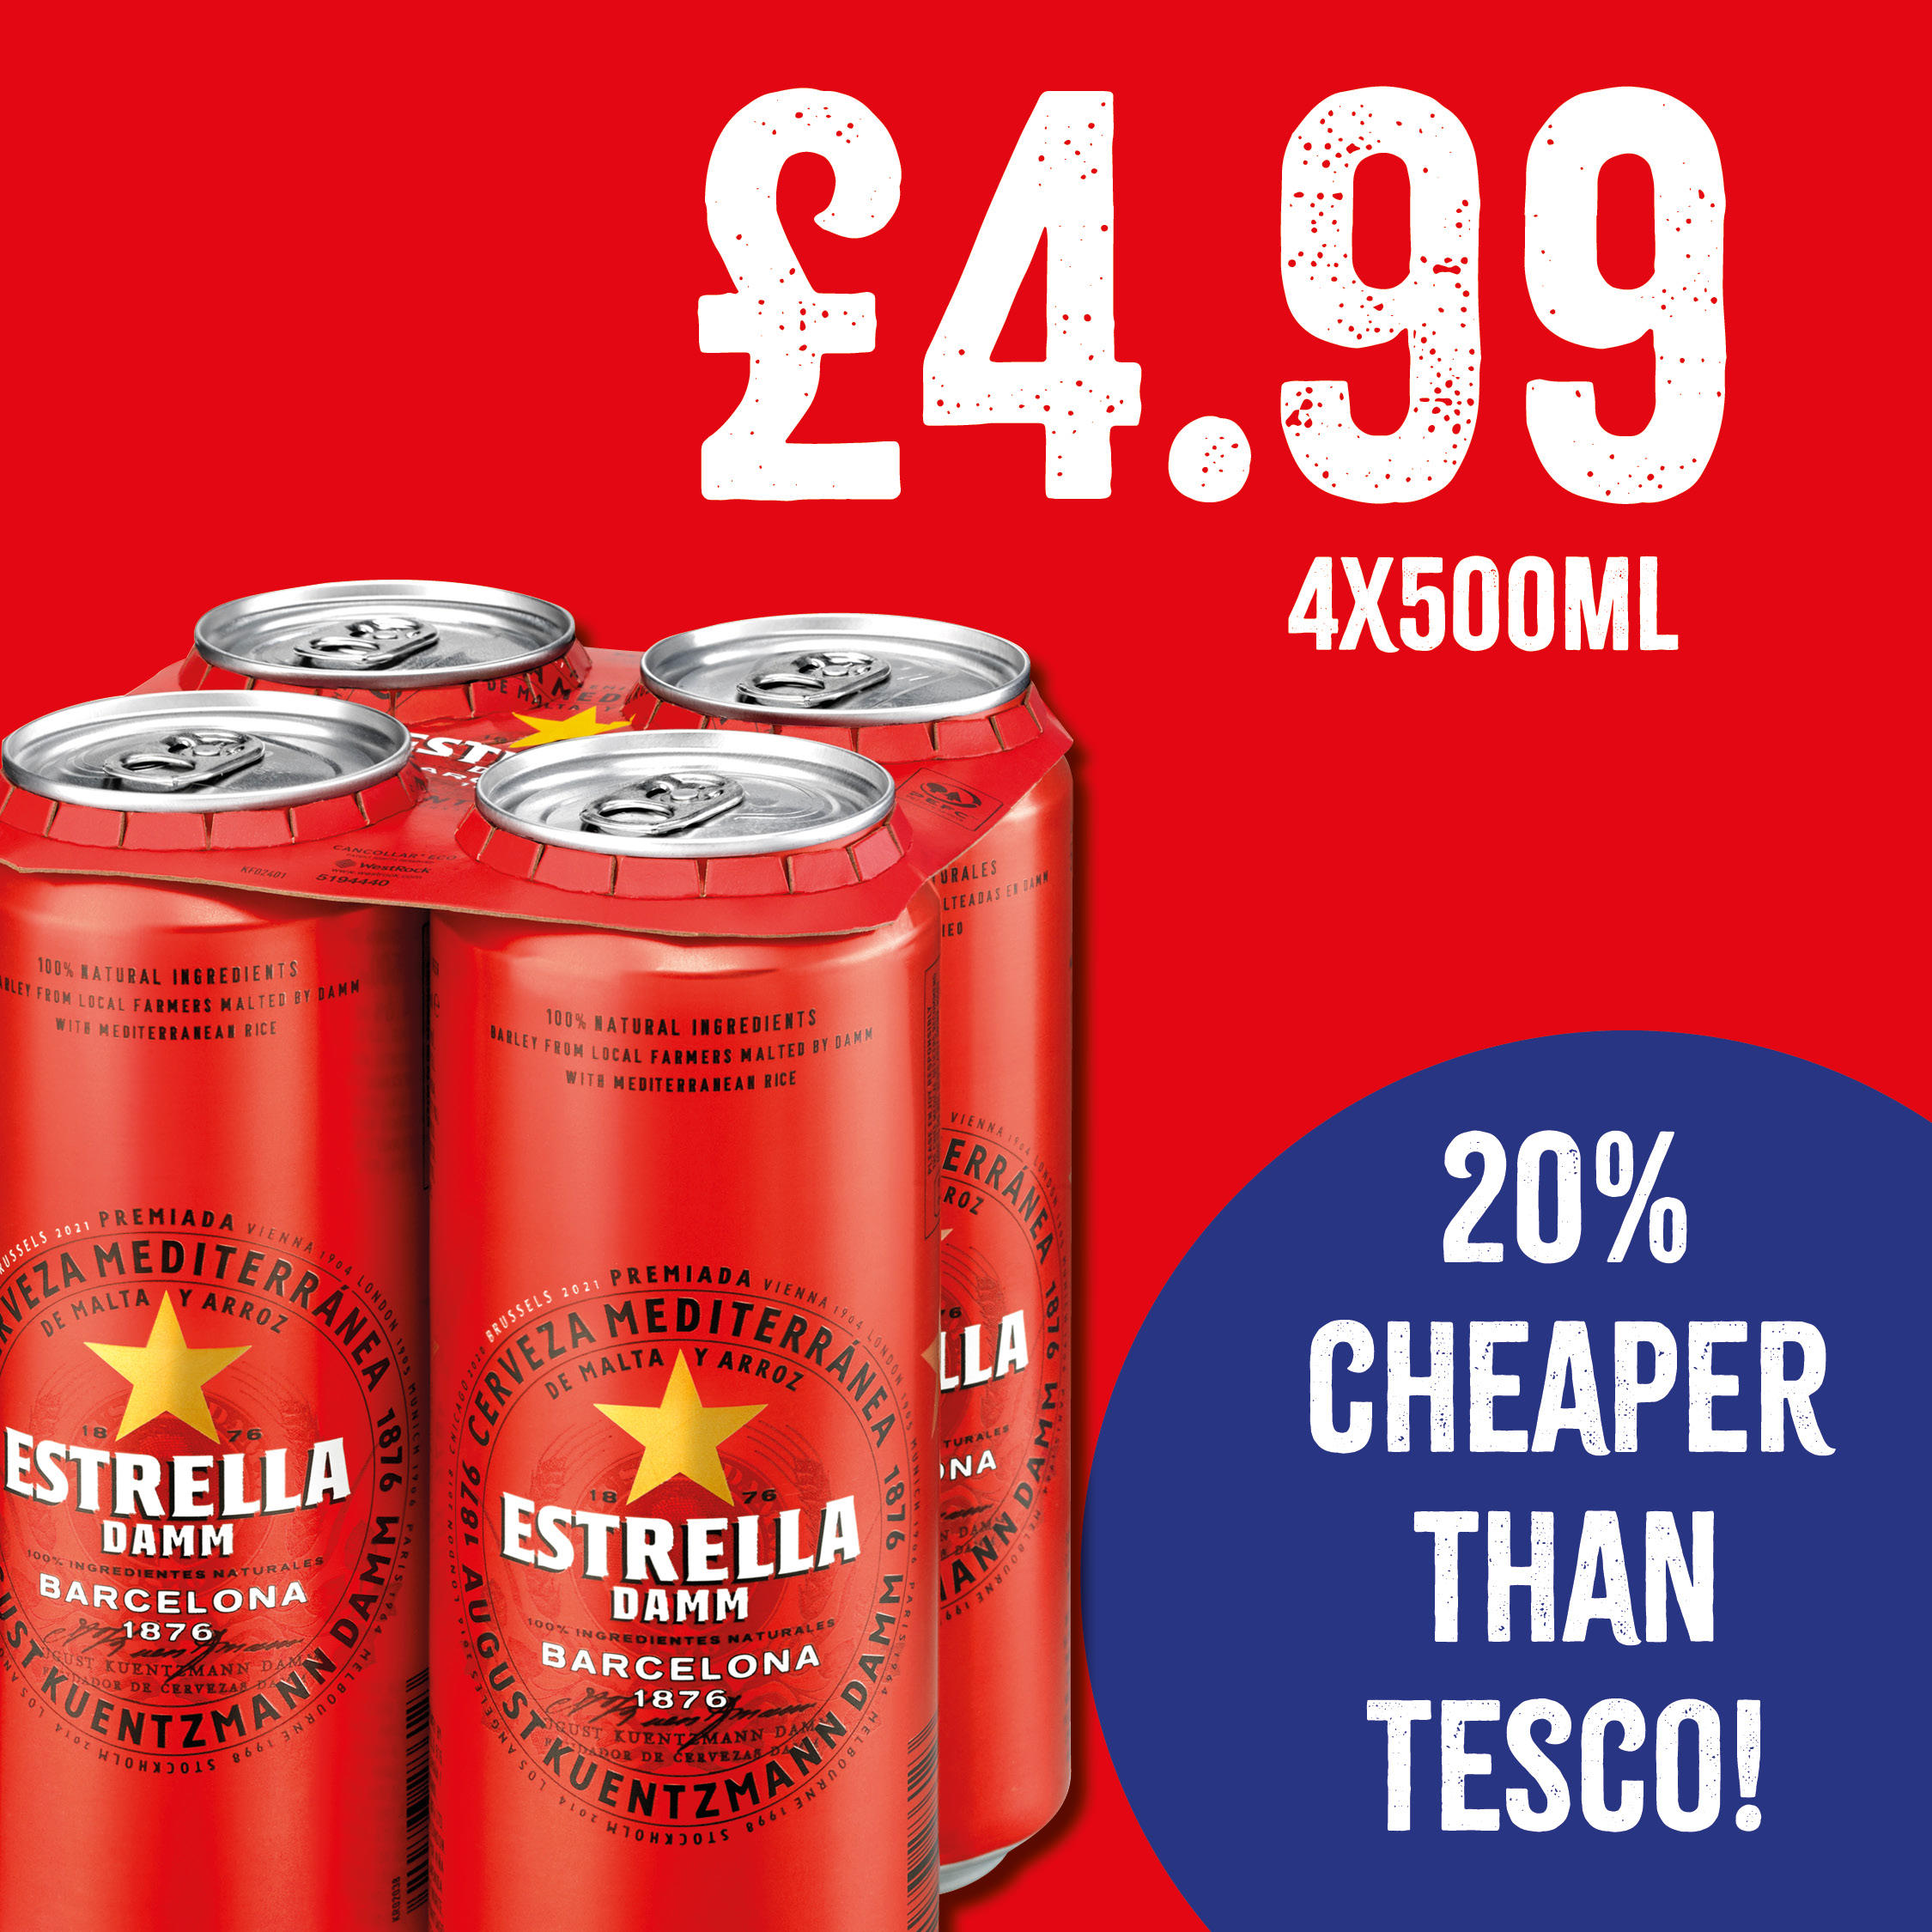 Estrella 4 x 500ml - Only £4.99 
20% Cheaper than Tesco Bargain Booze Newport Pagnell 01908 612653